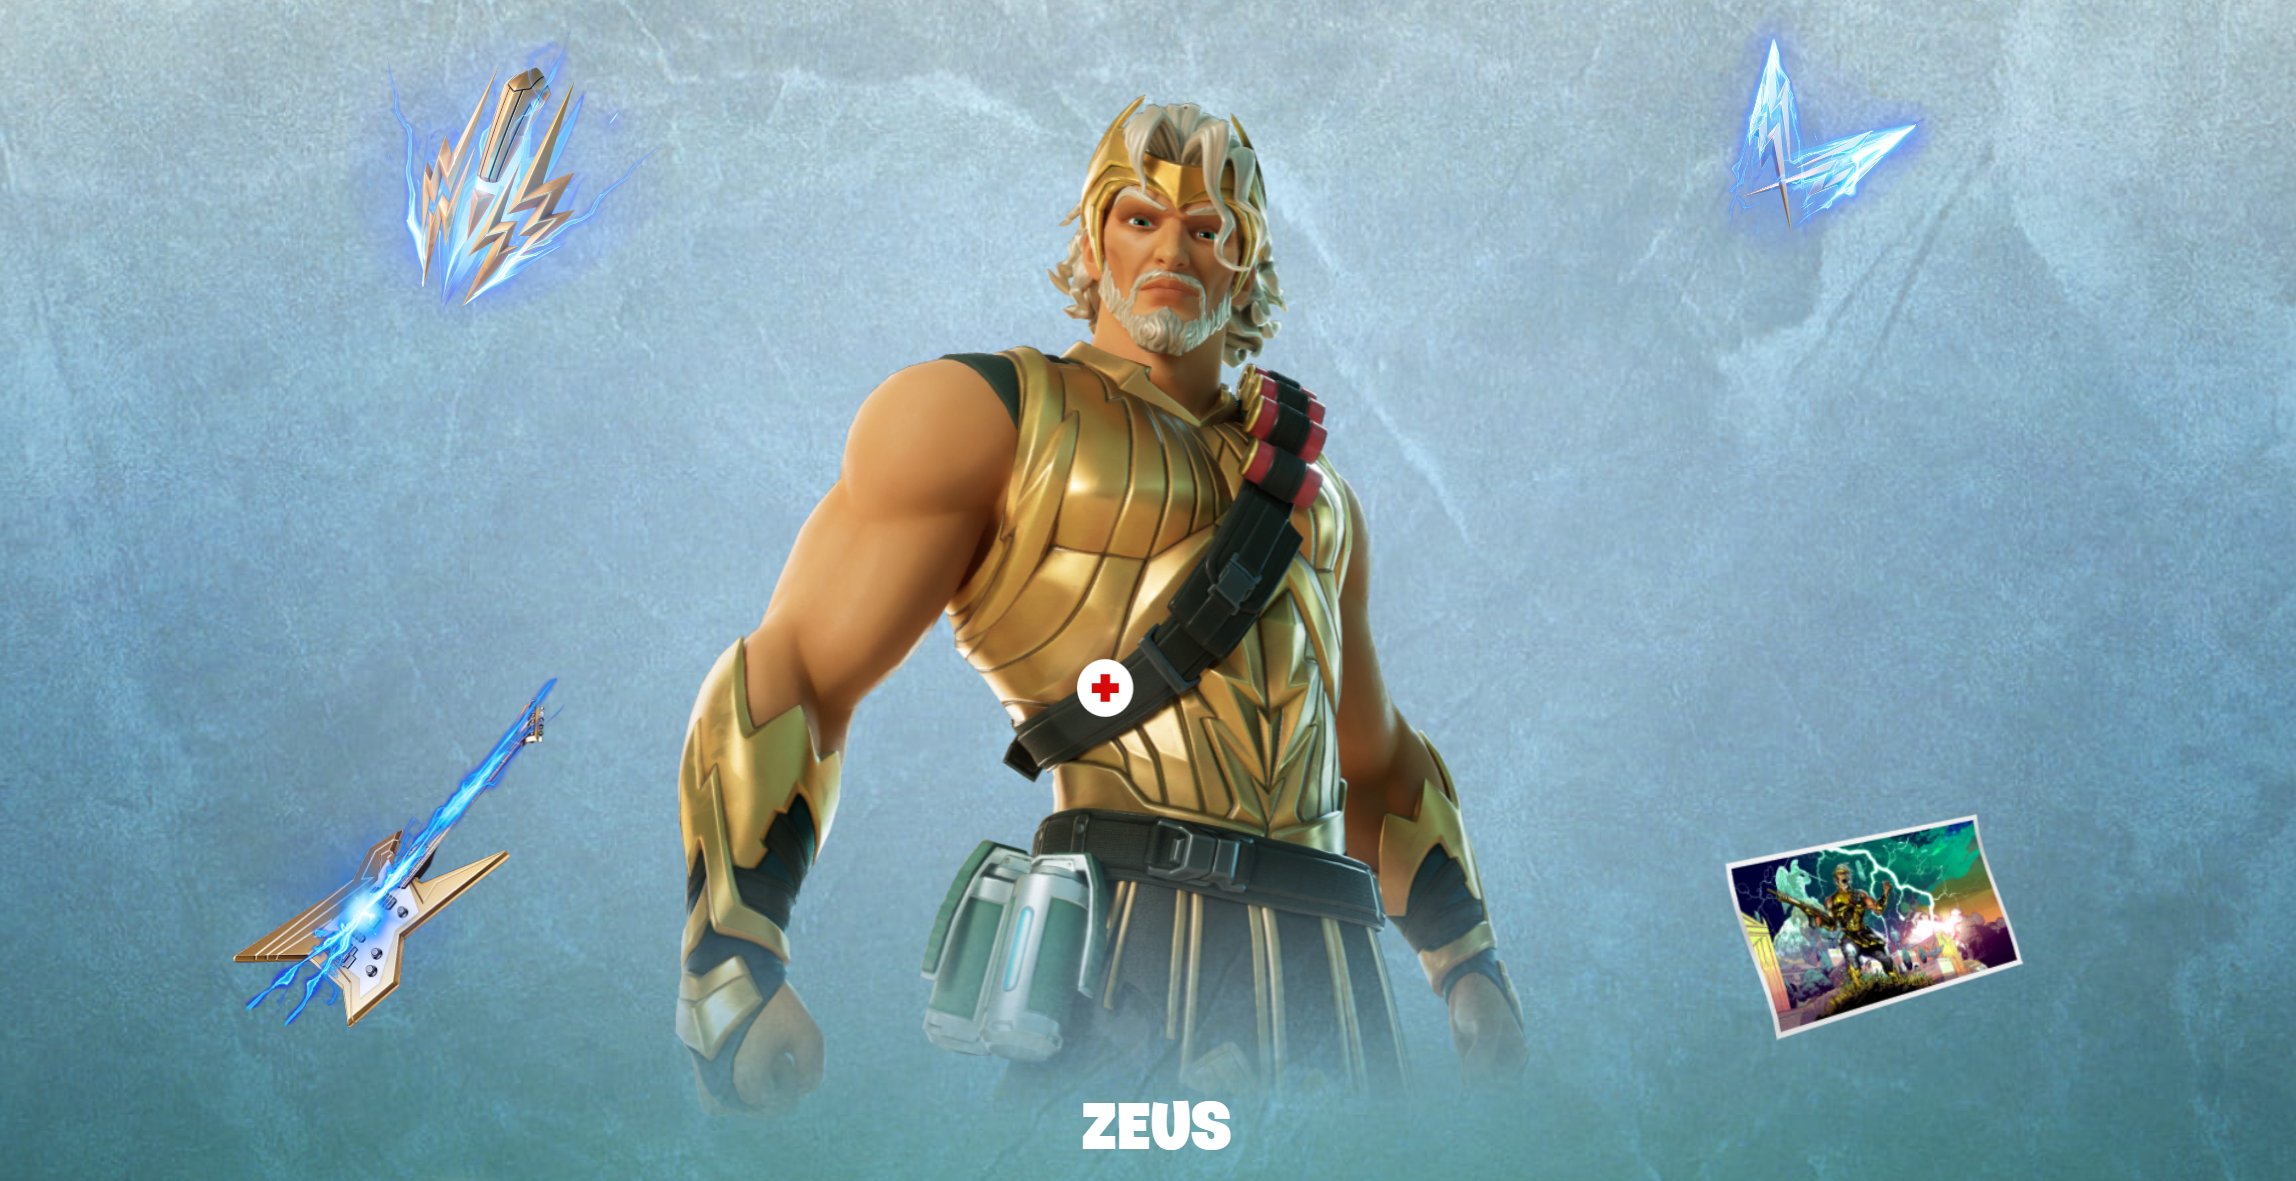 Zeus Fortnite wallpaper